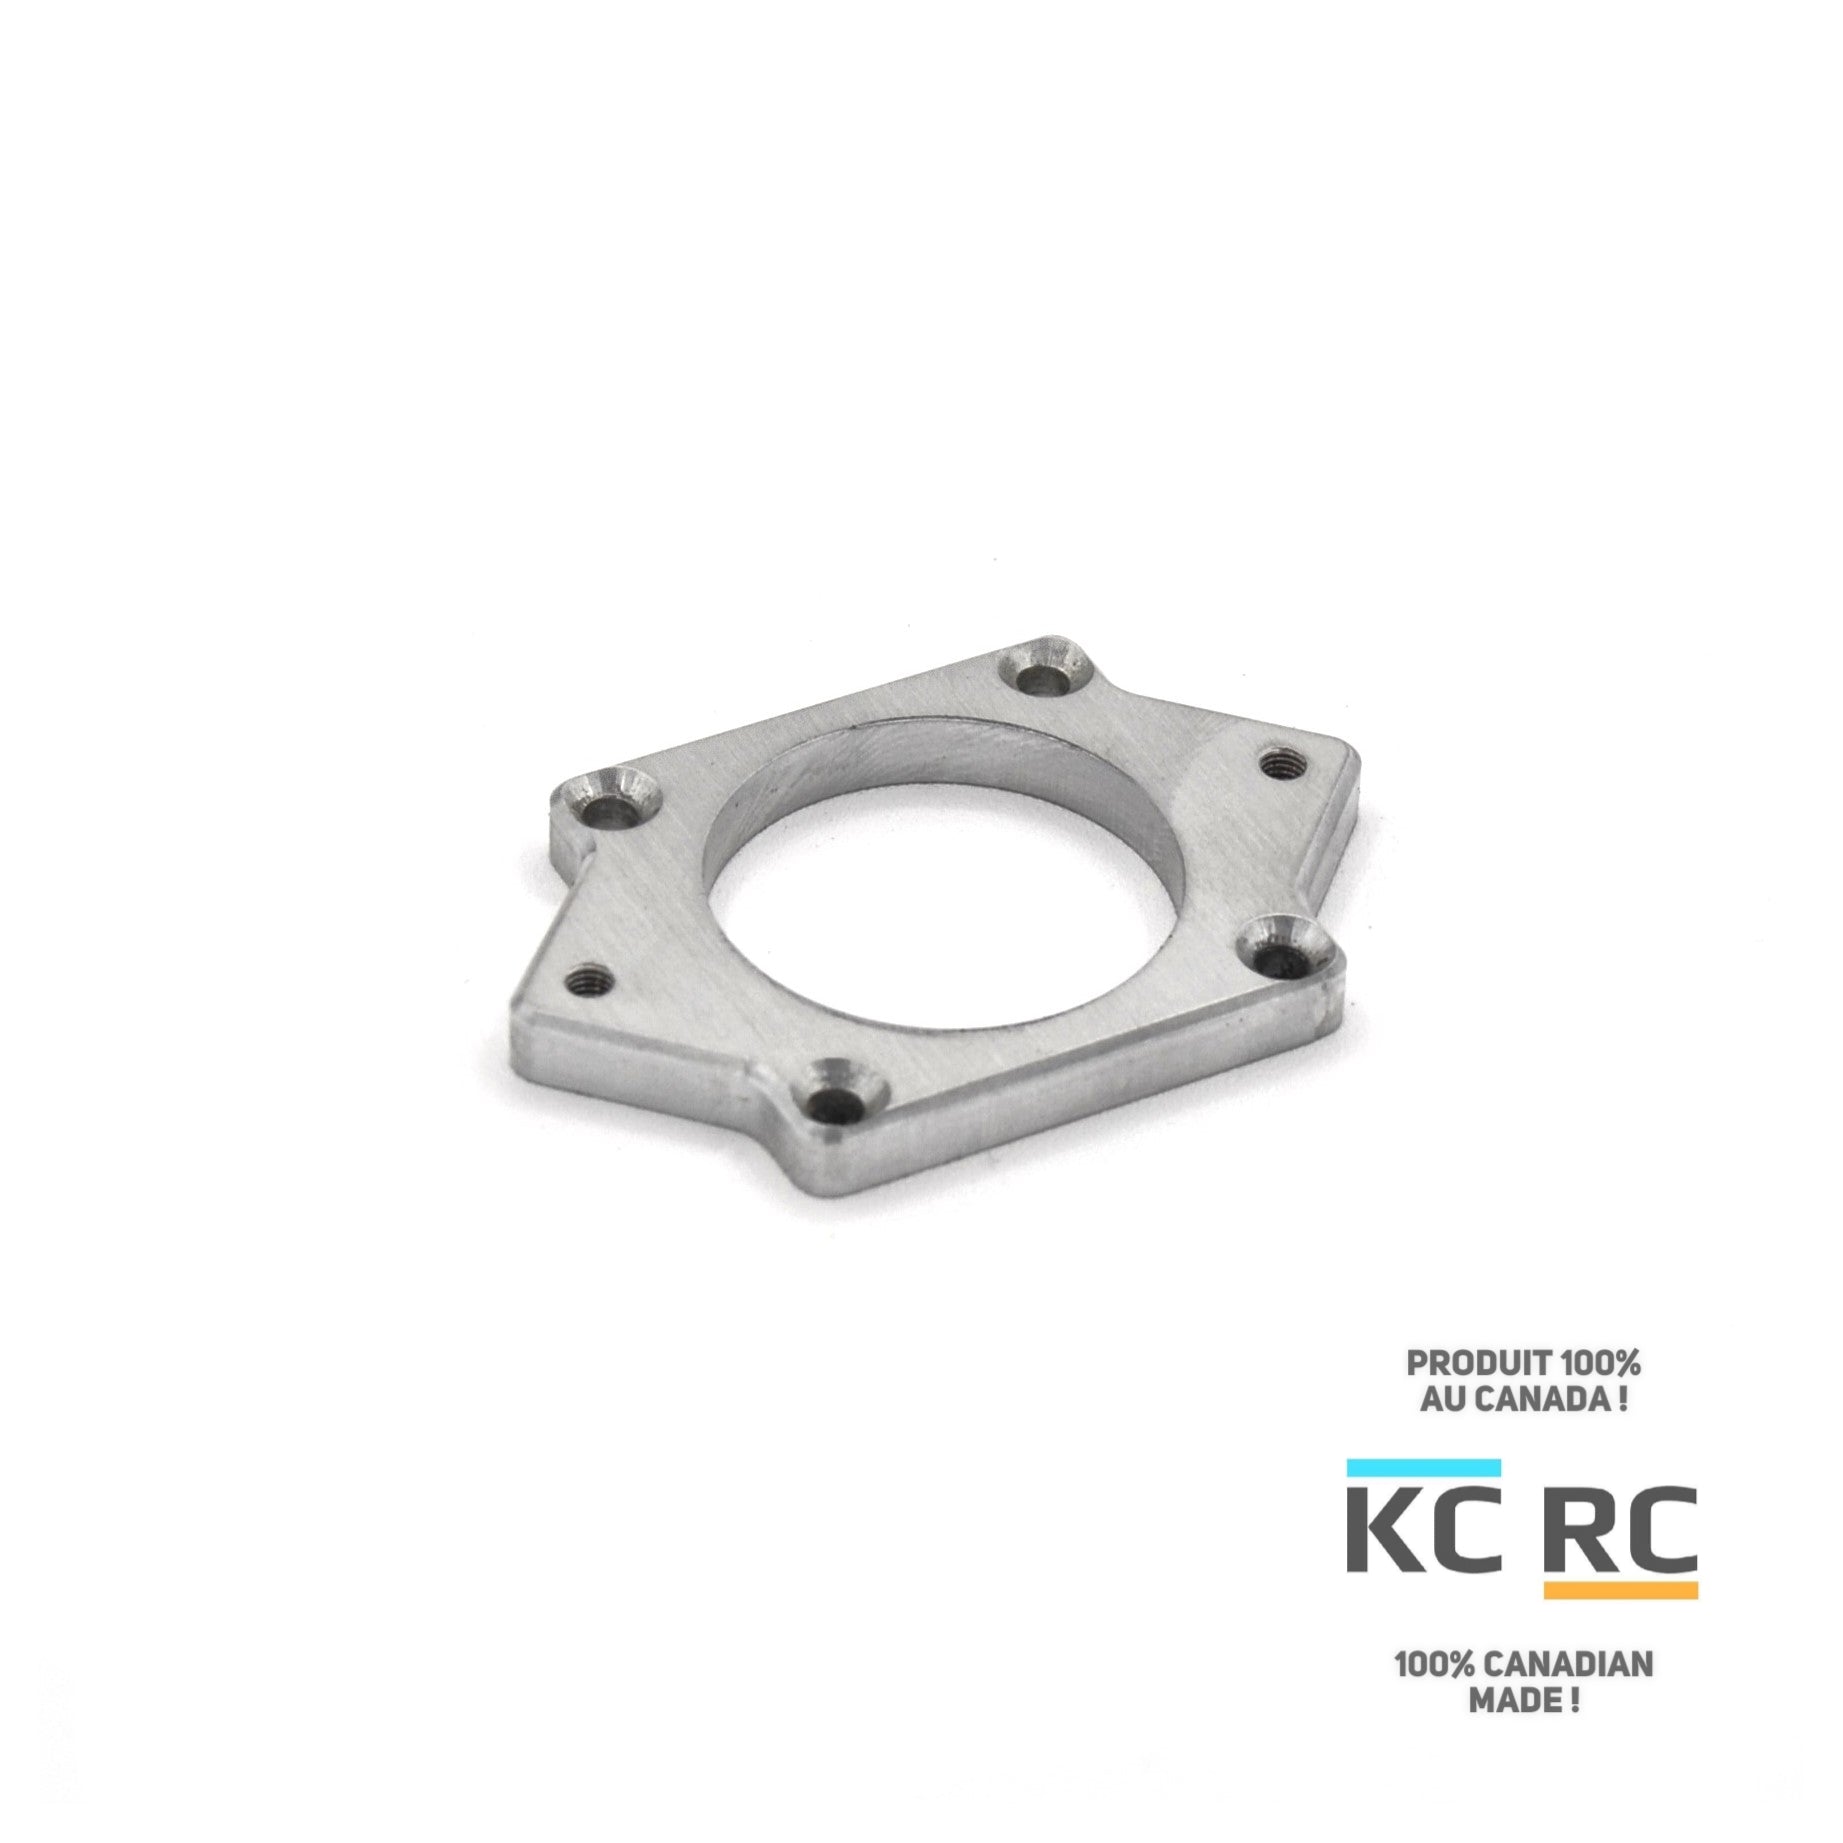 KC RC Simple fan mount plate for Traxxas Sledge motor